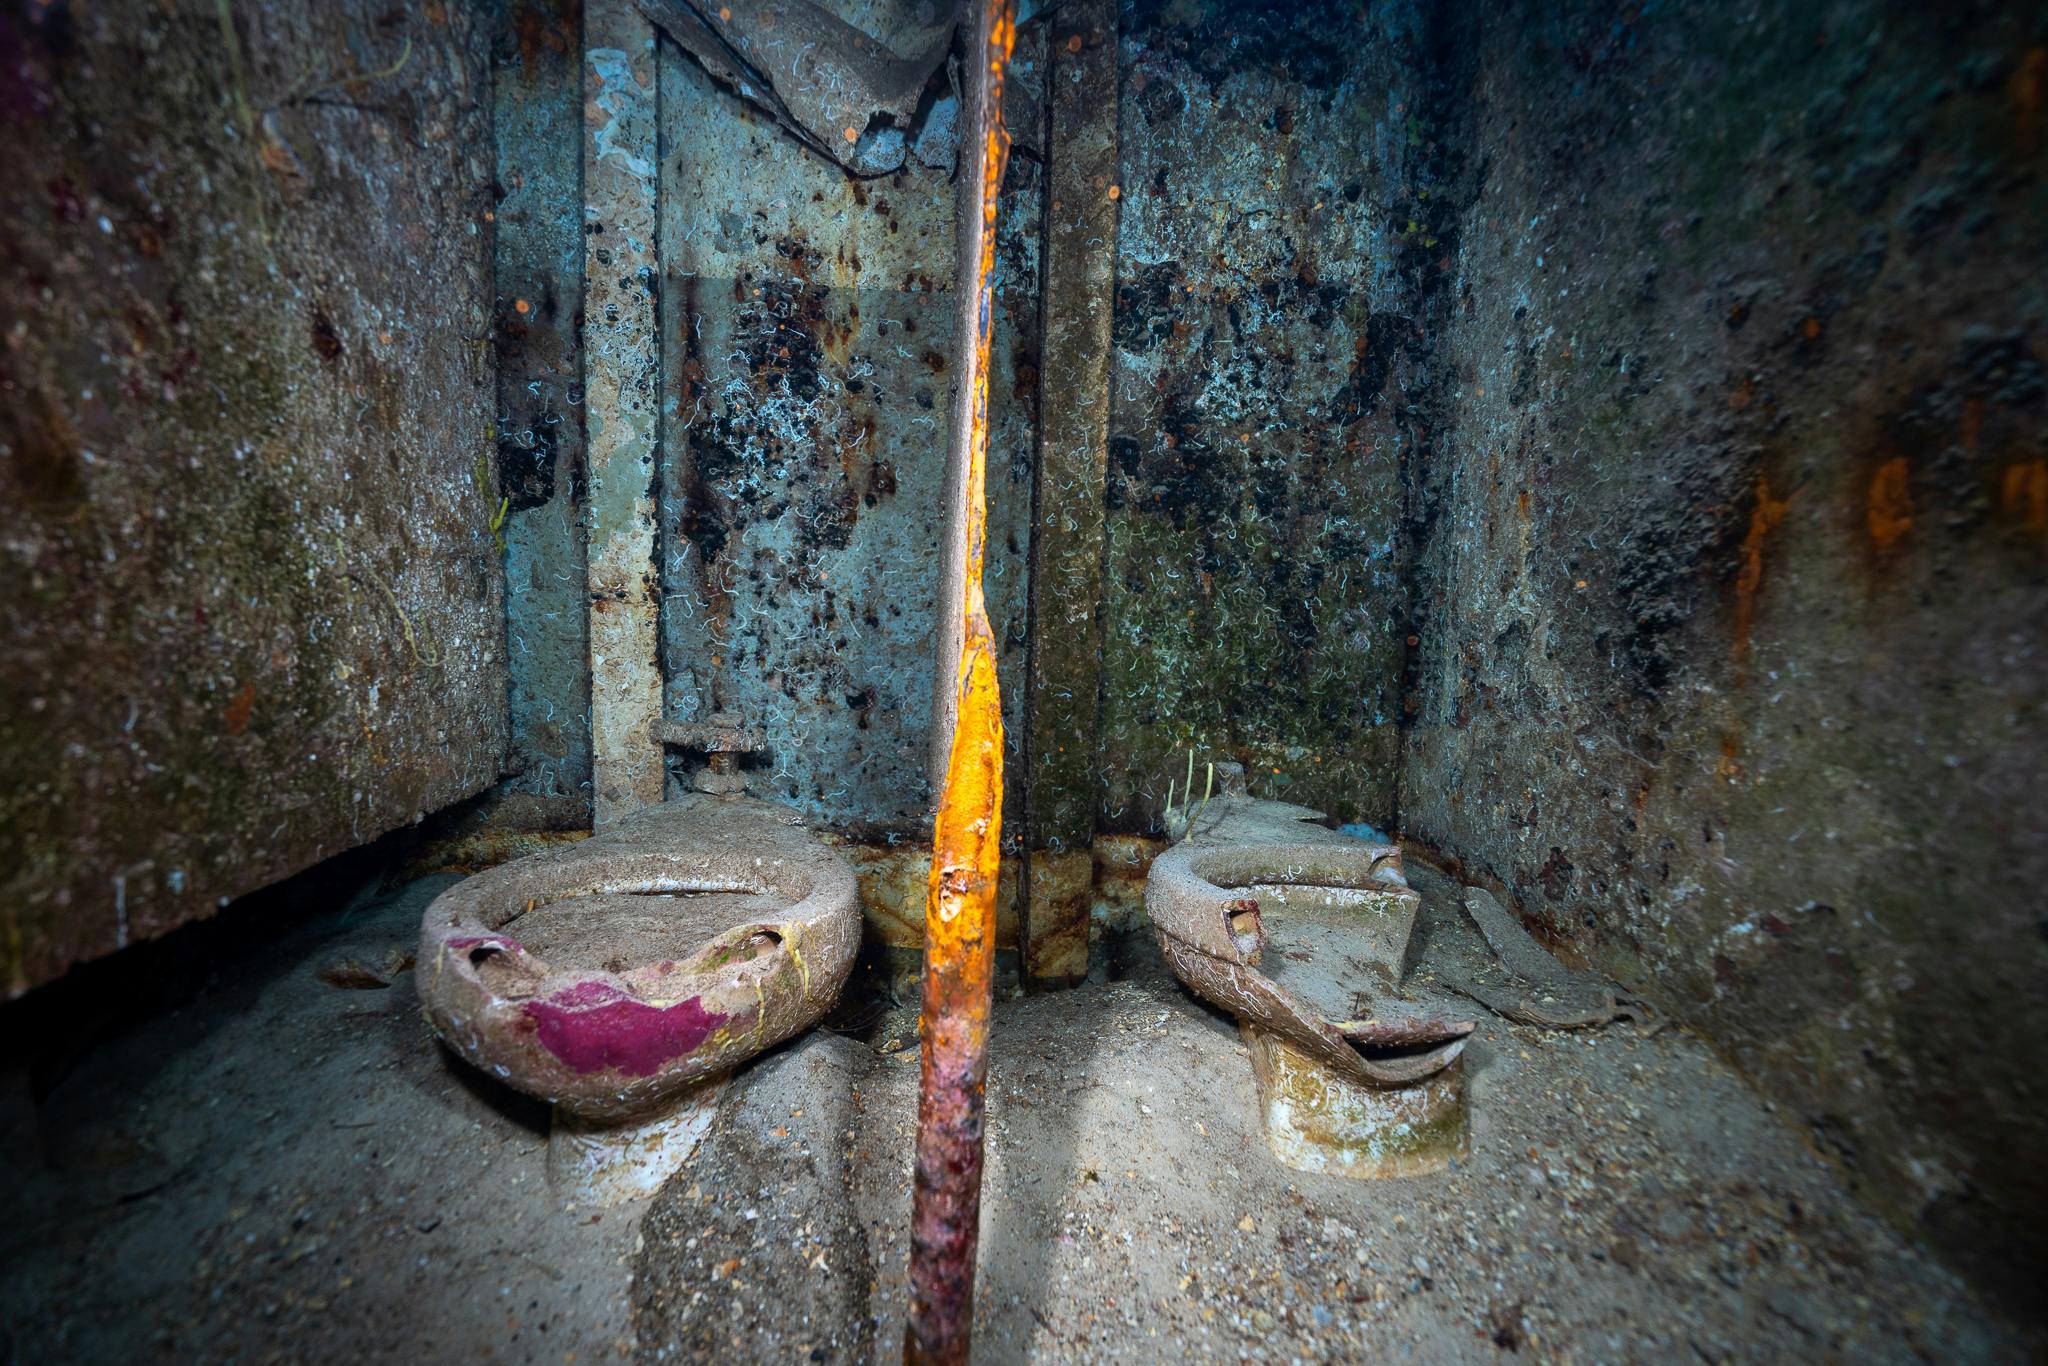 Toilets inside a shipwreck